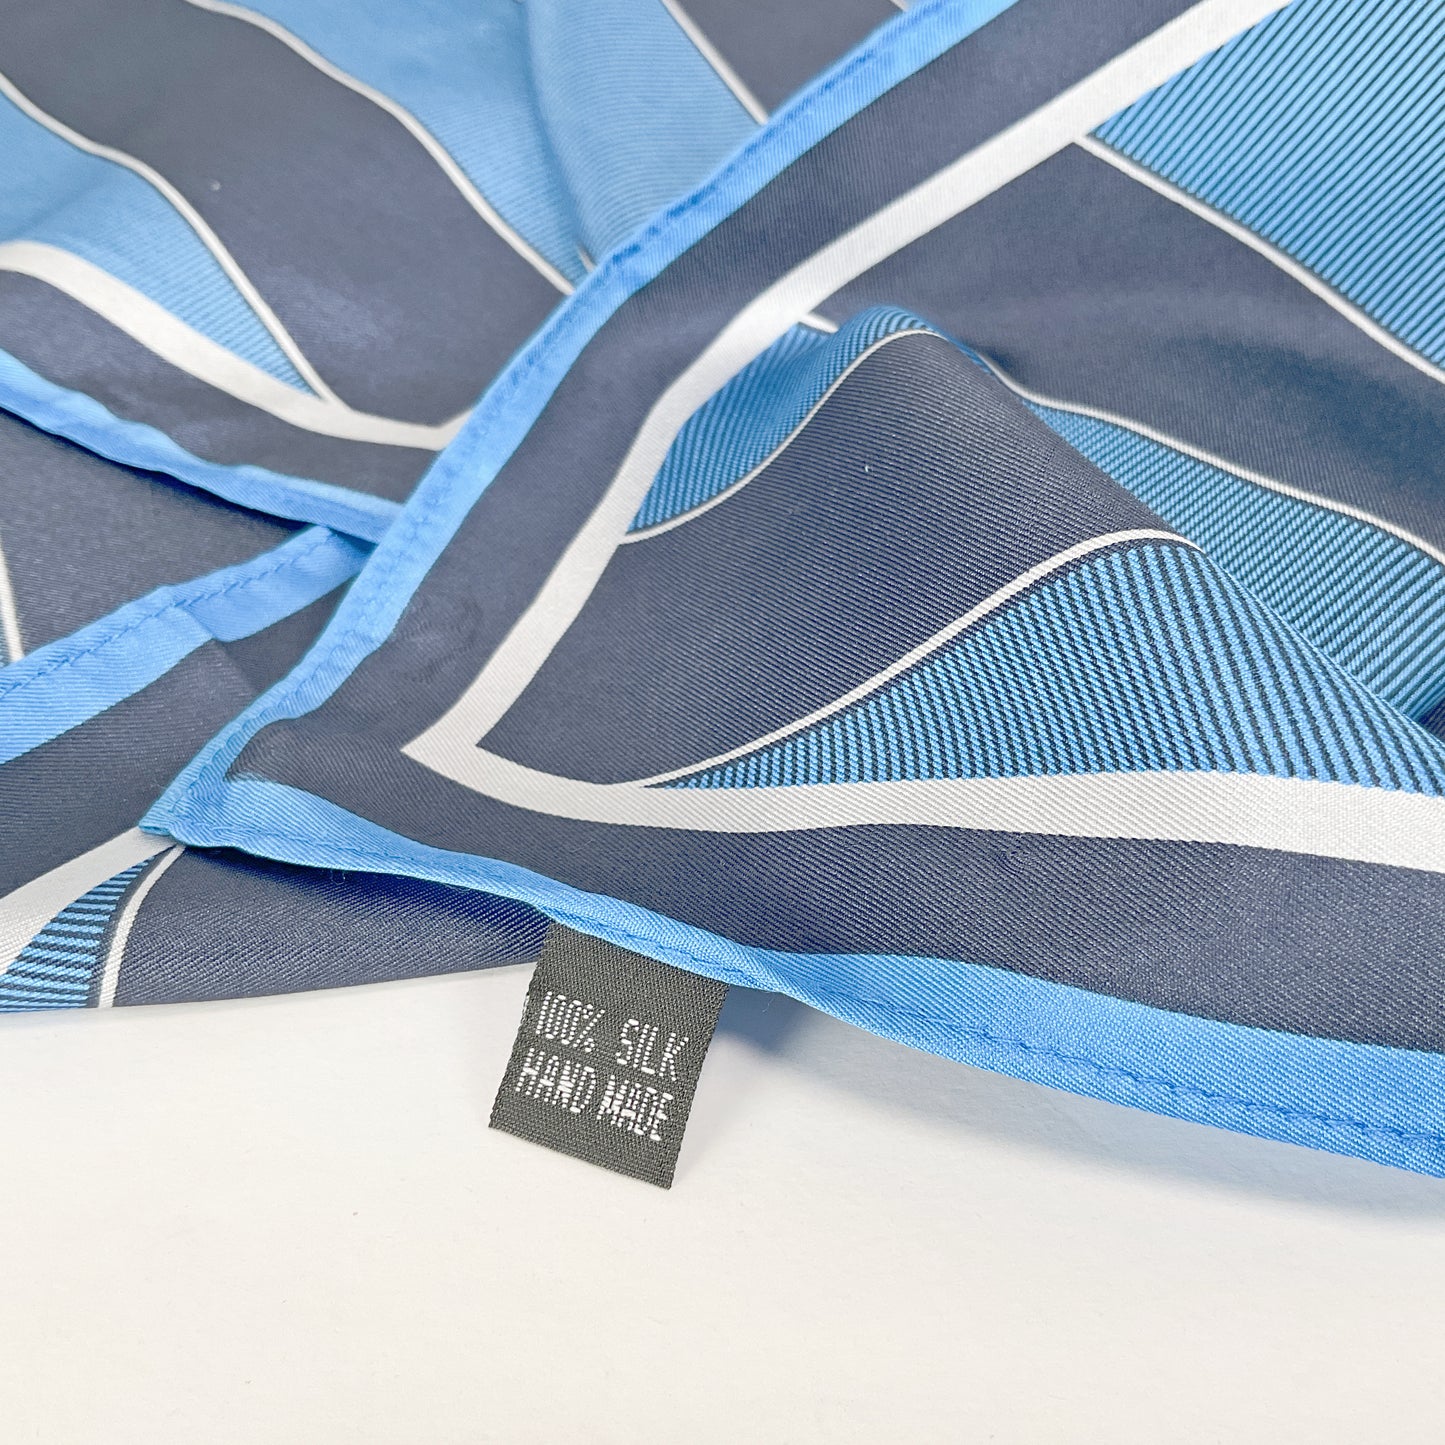 Fifa - Hand Made Blue Silk Striped Scarf